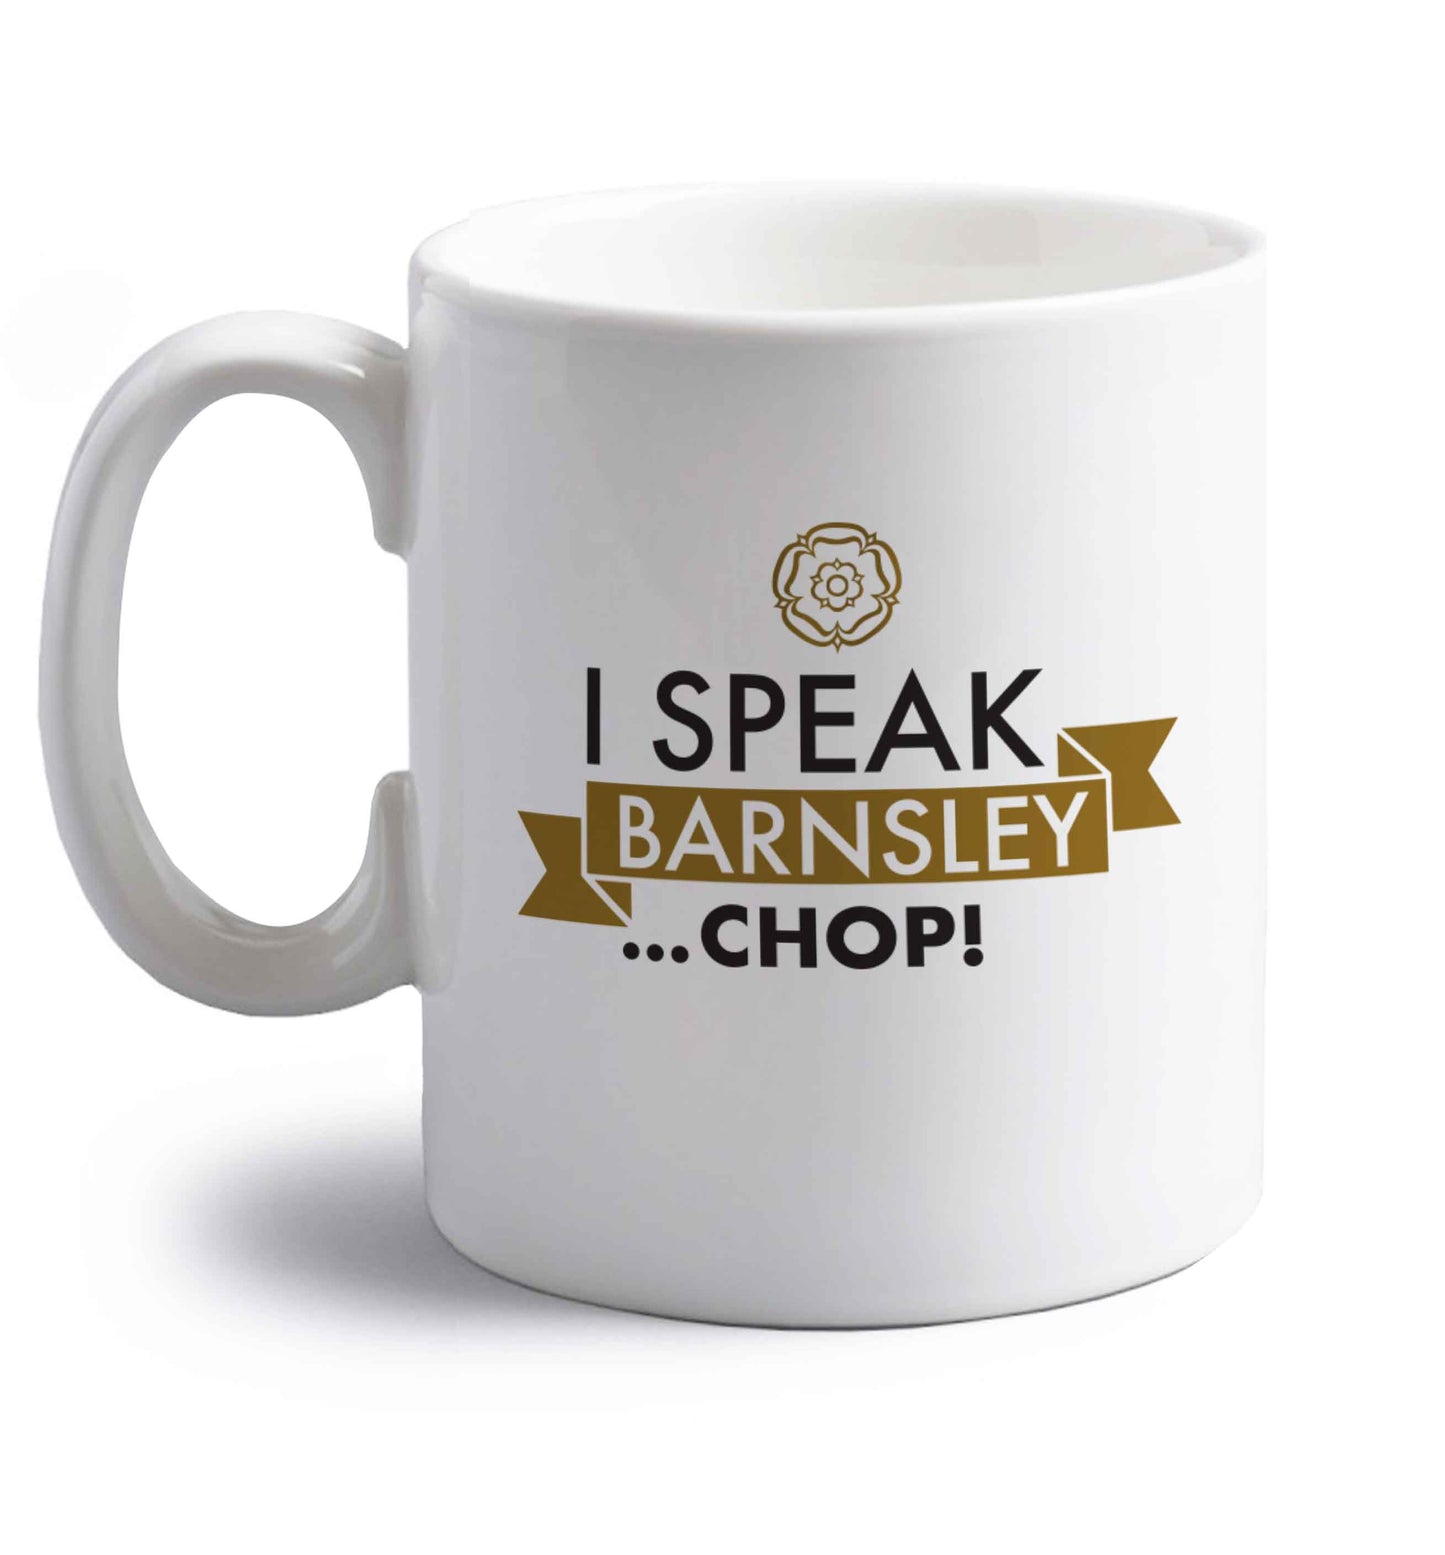 I speak Barnsley...chop! right handed white ceramic mug 